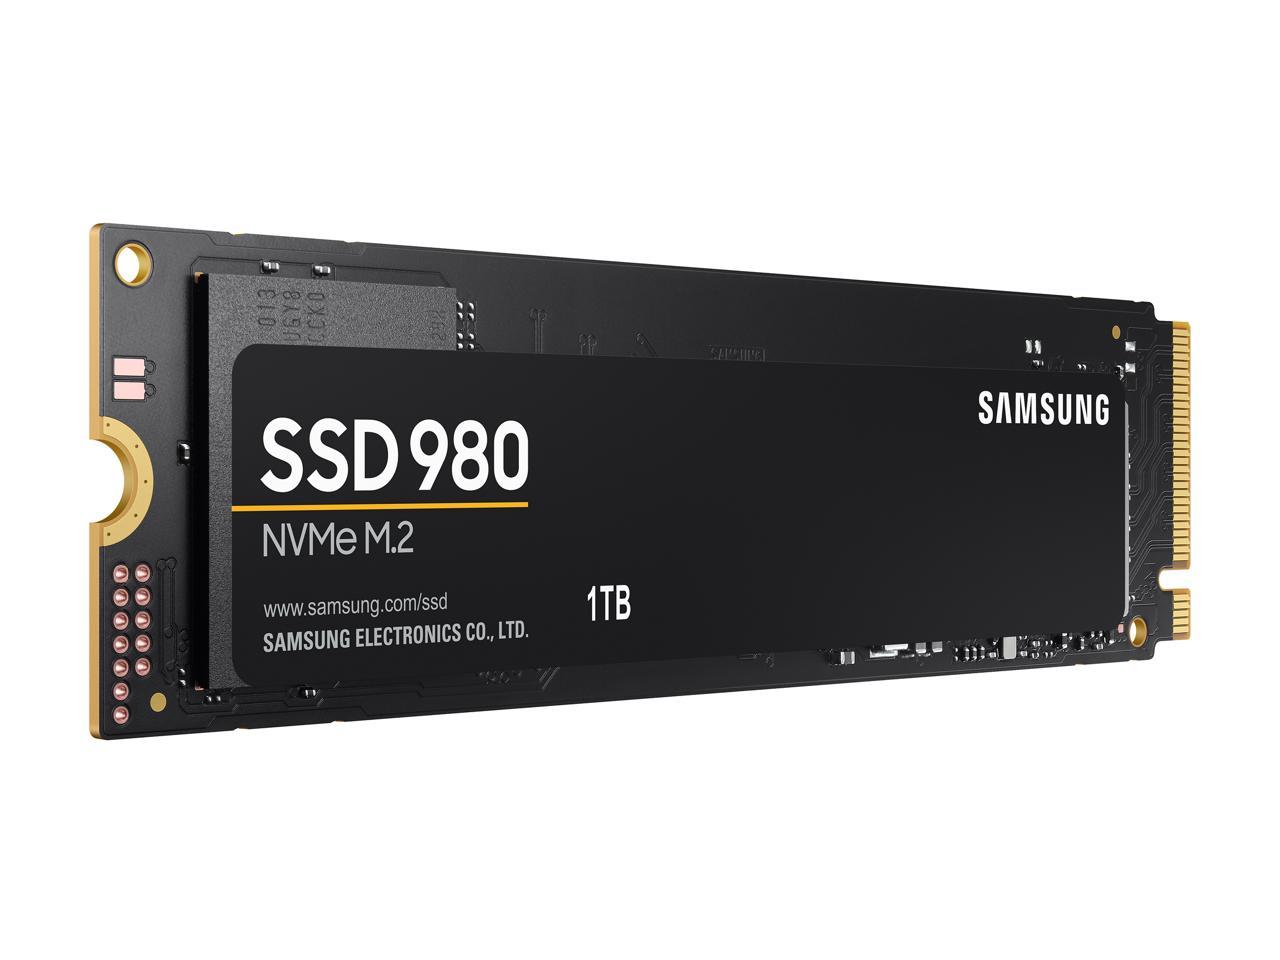 1TB SAMSUNG 980 NVMe SSD @Newegg $110